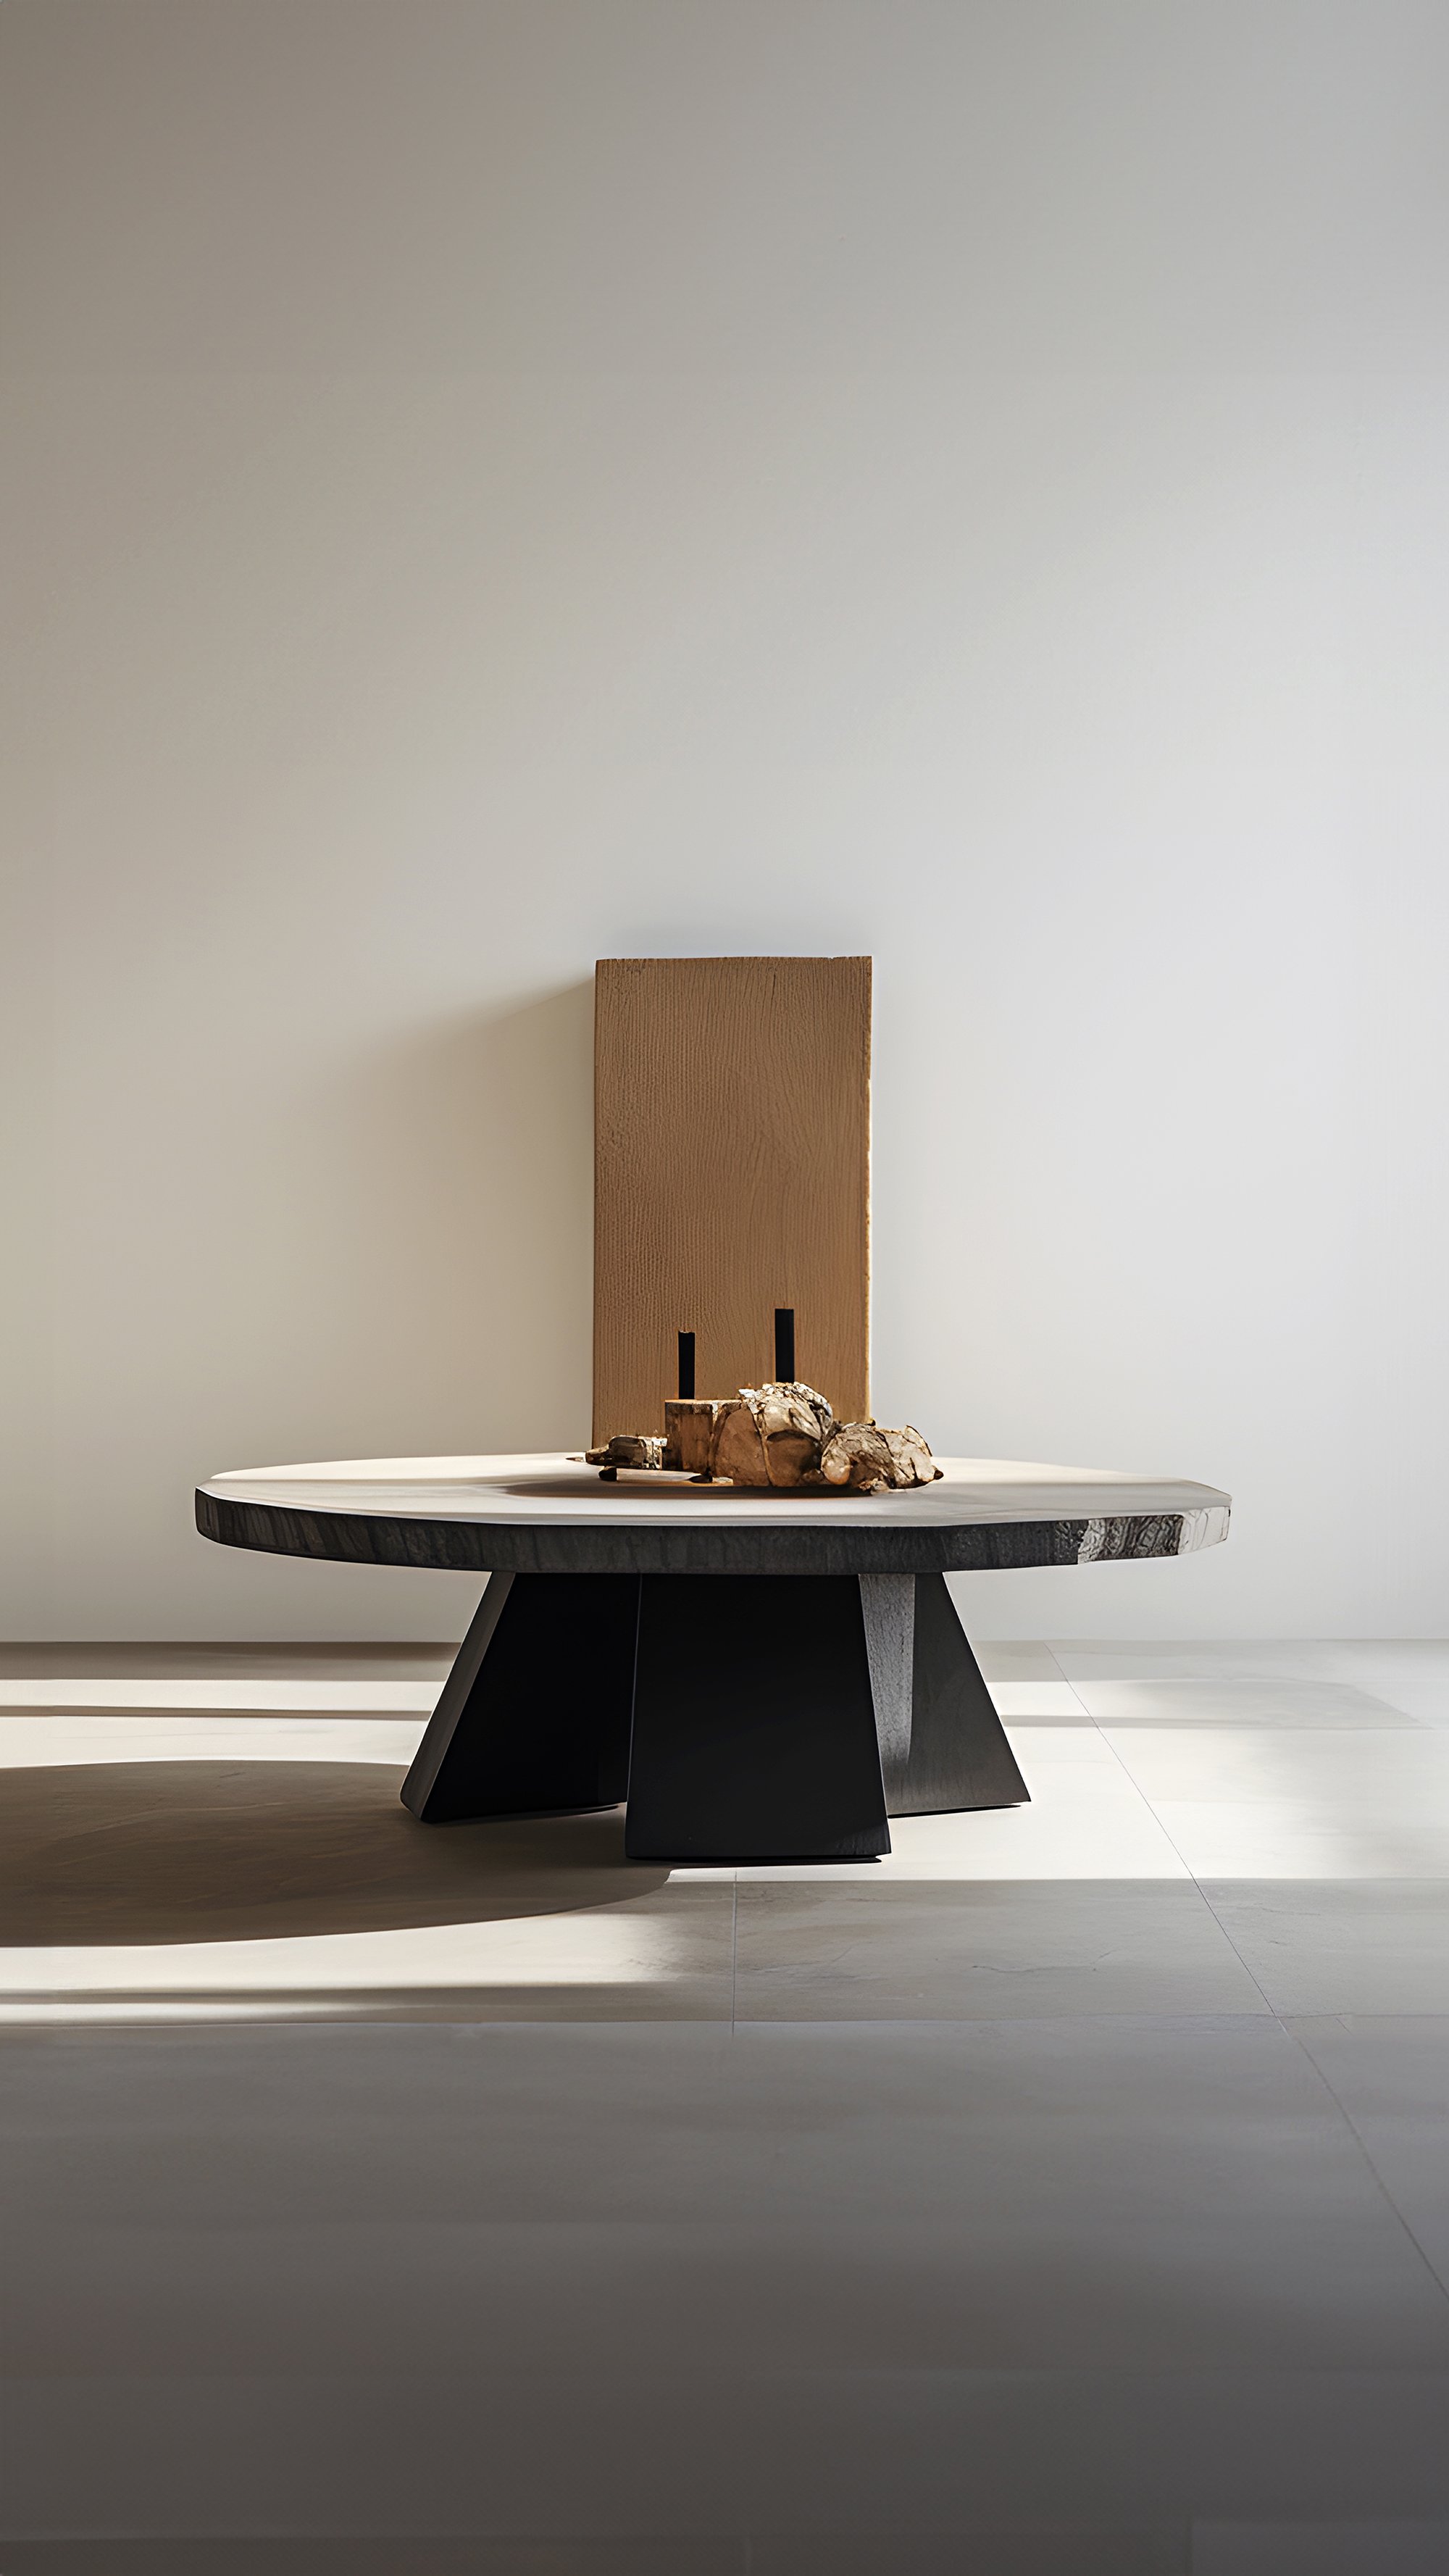 Duo-Tone Square Coffee Table - Dynamic Fundamenta 35 by NONO — 11.jpg